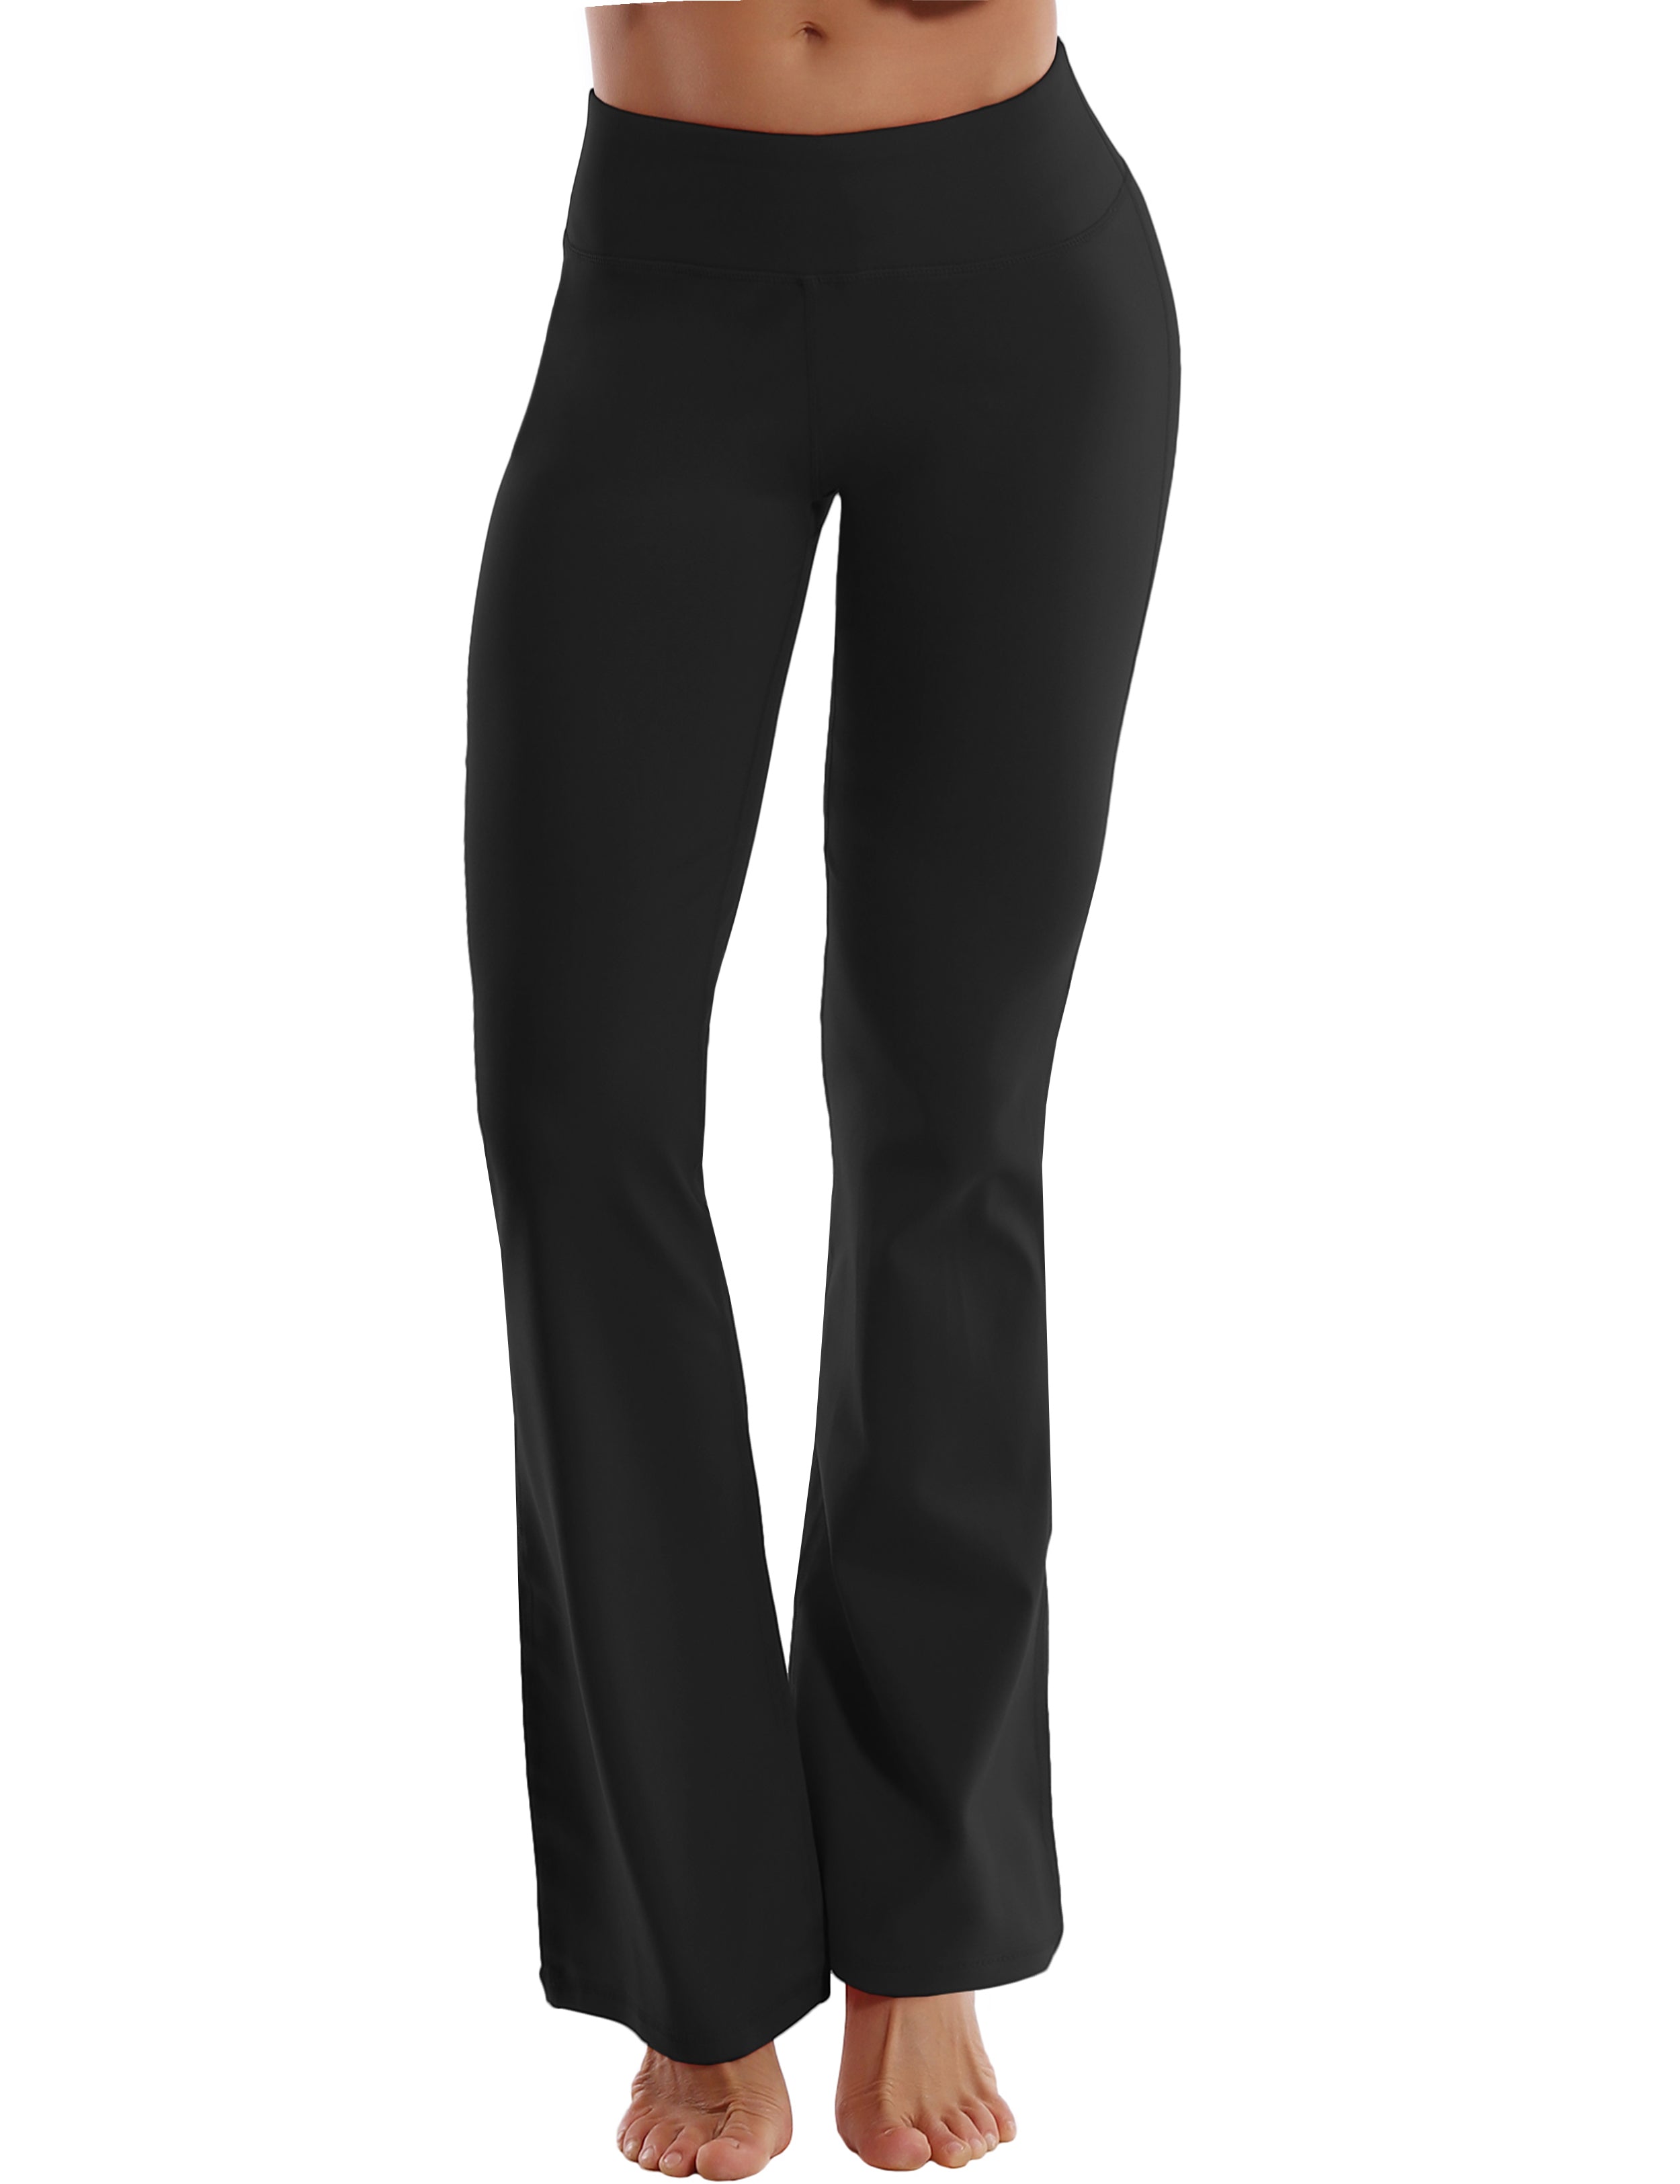 BUBBLELIME 29/31/33/35/37 4 Styles Women's High Waist Bootcut Yoga  Pants - Basic Nylon_EGGPLANTPURPLE S-31 Inseam 